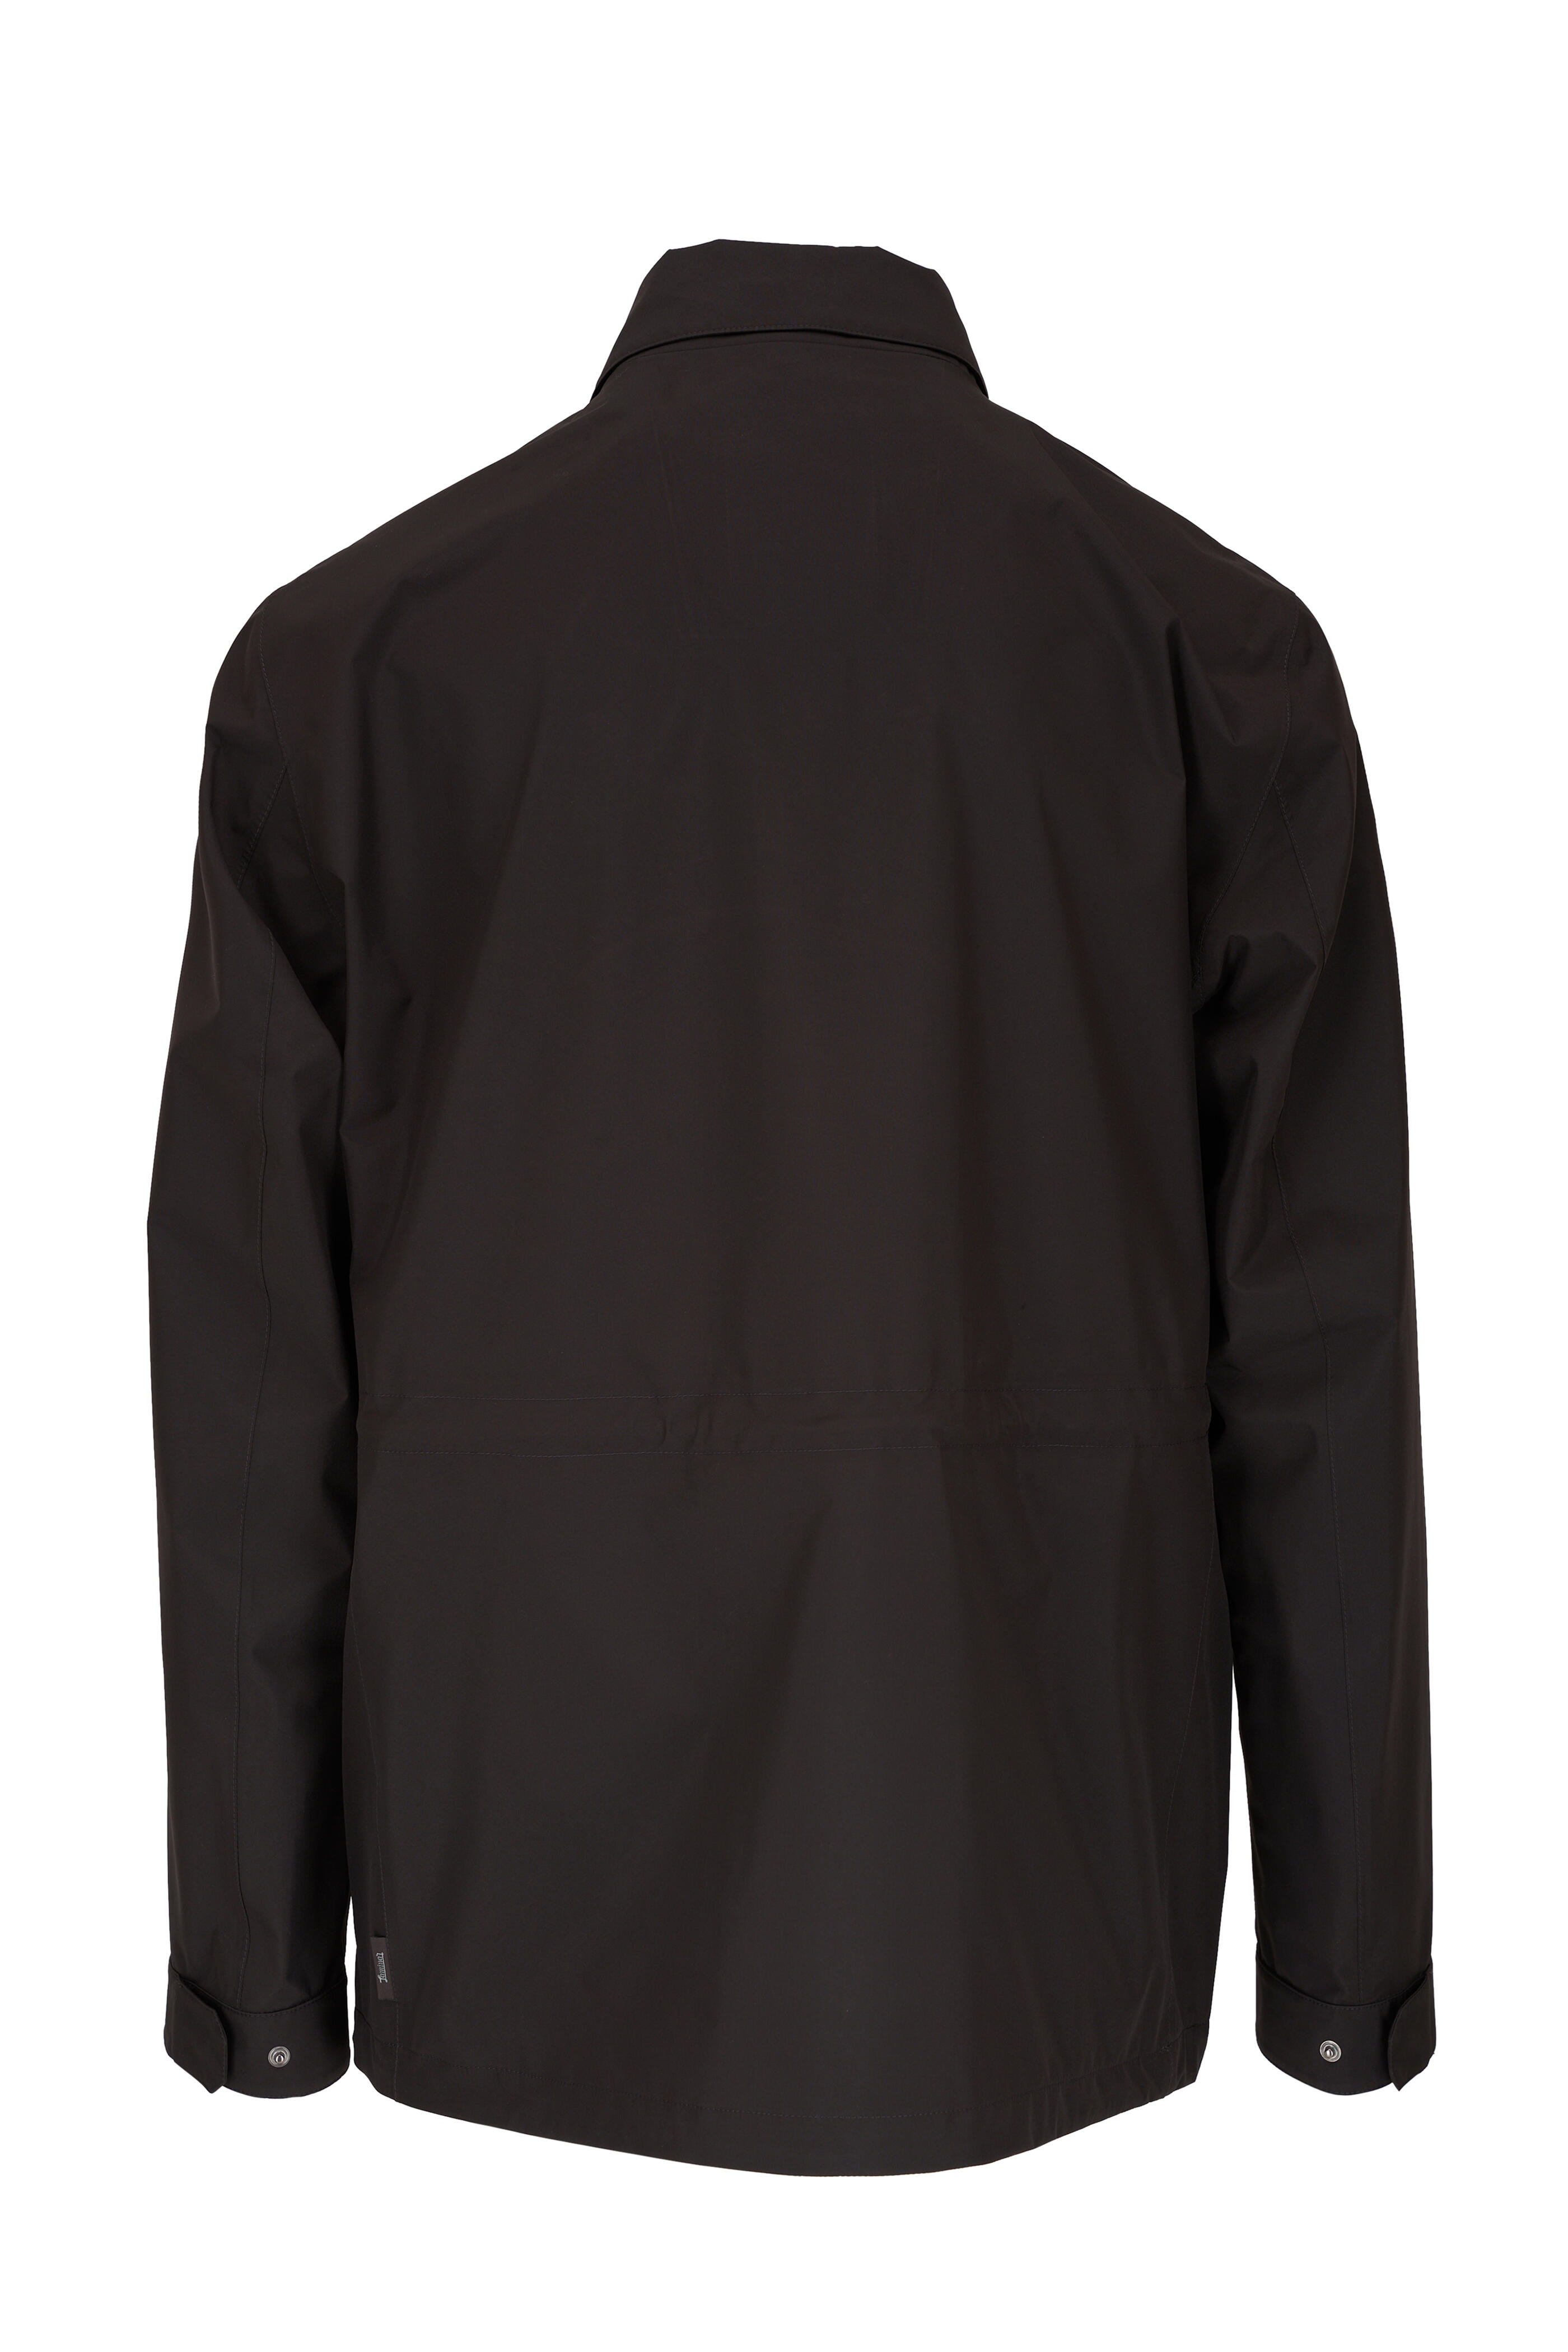 Herno - Laminar Dark Brown 2 Pocket Field Jacket